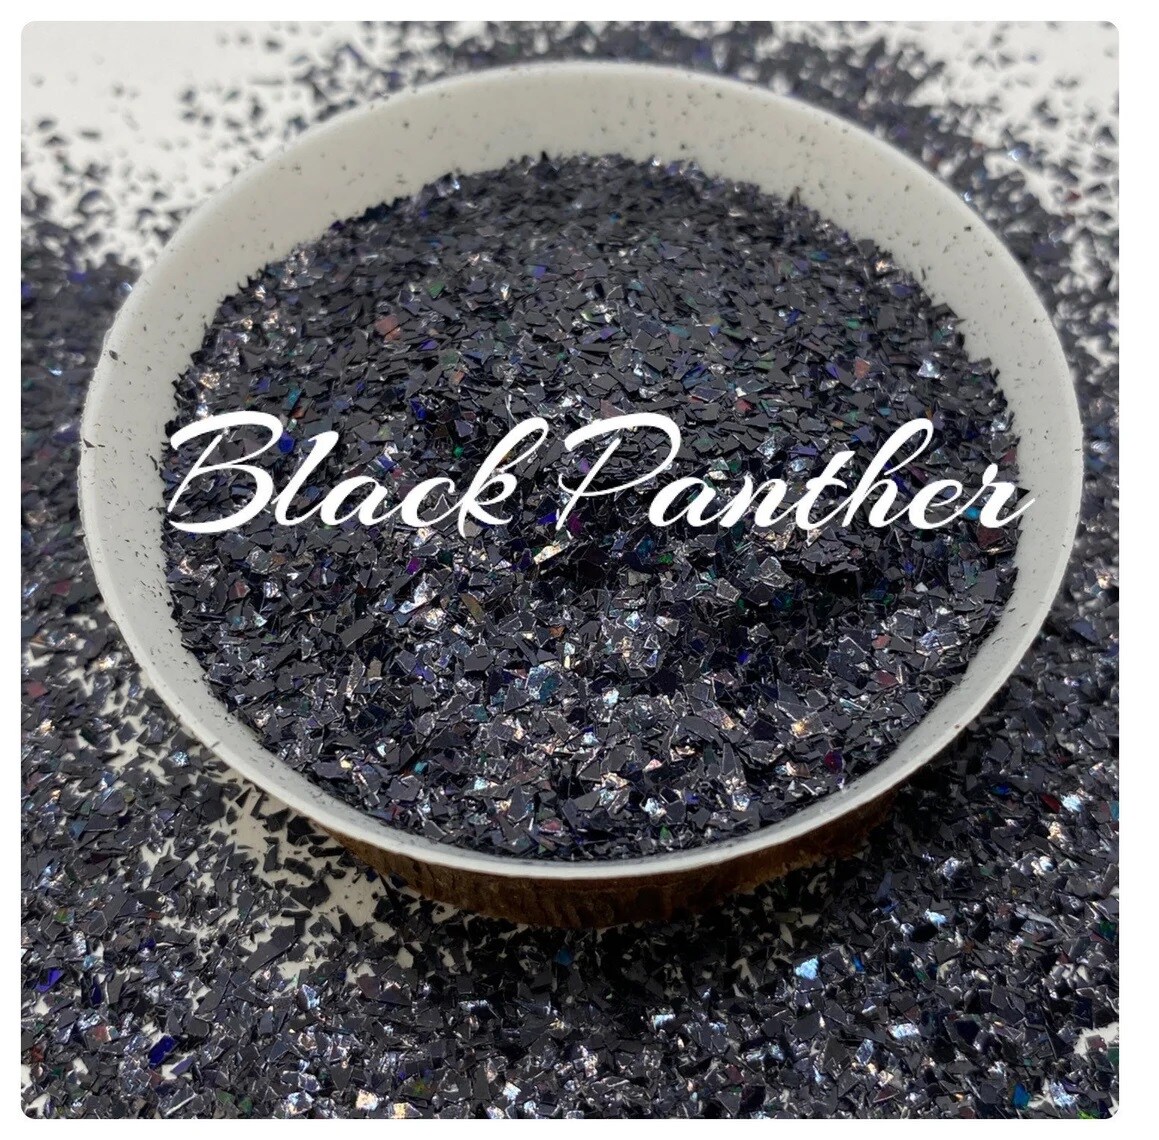 Blank Panther: Holographic Shard glitter mix 1oz